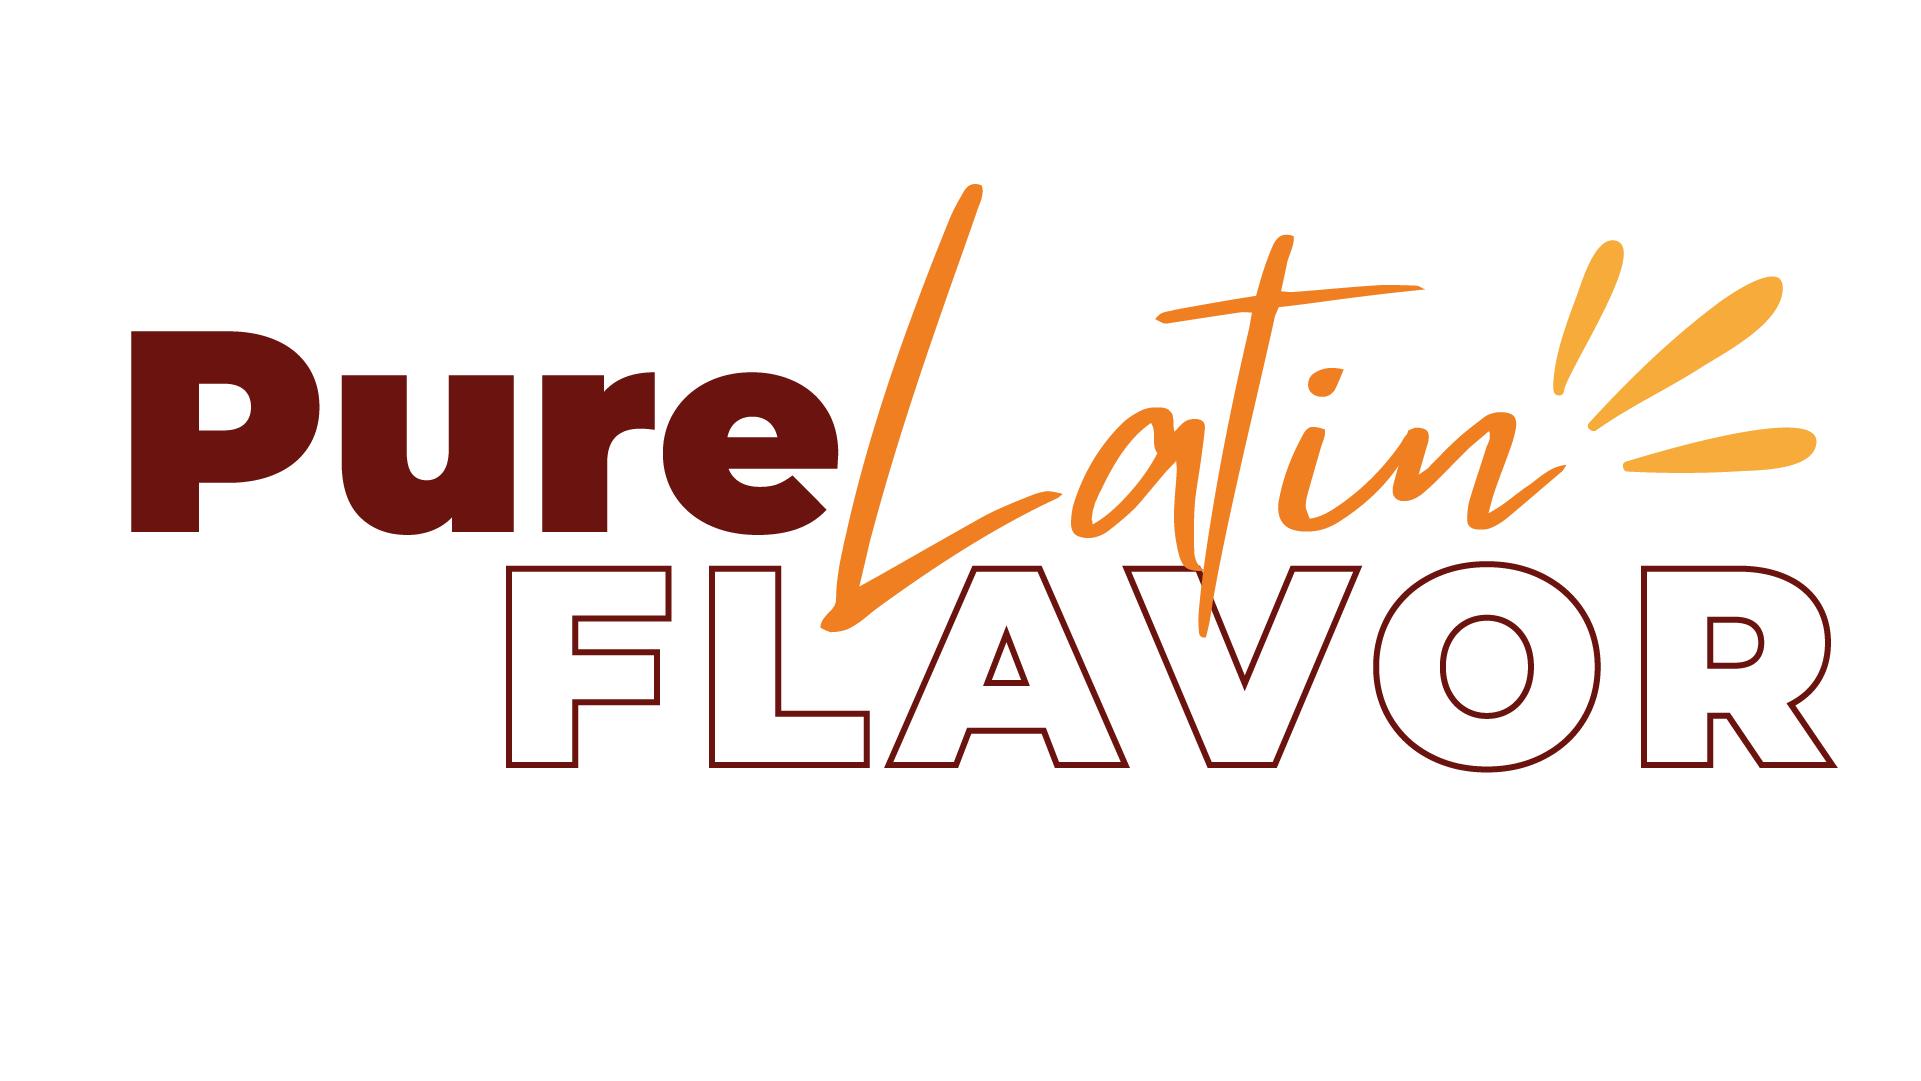 Pure latin flavor